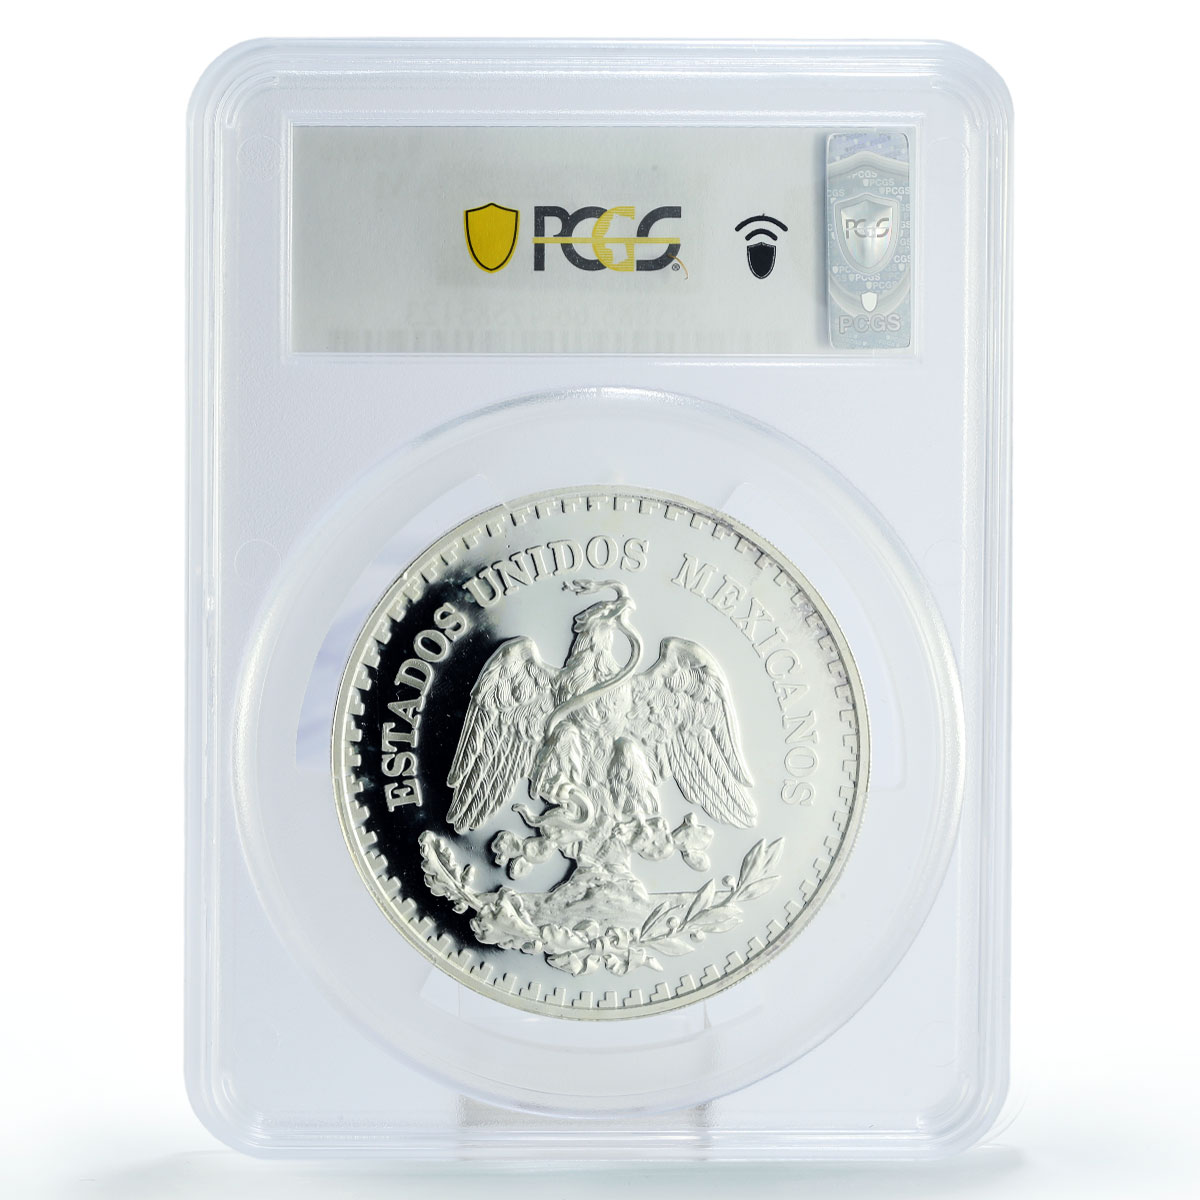 Mexico 5 onzas Numismatic Association ANA Butterflies PR66 PCGS silver coin 1987